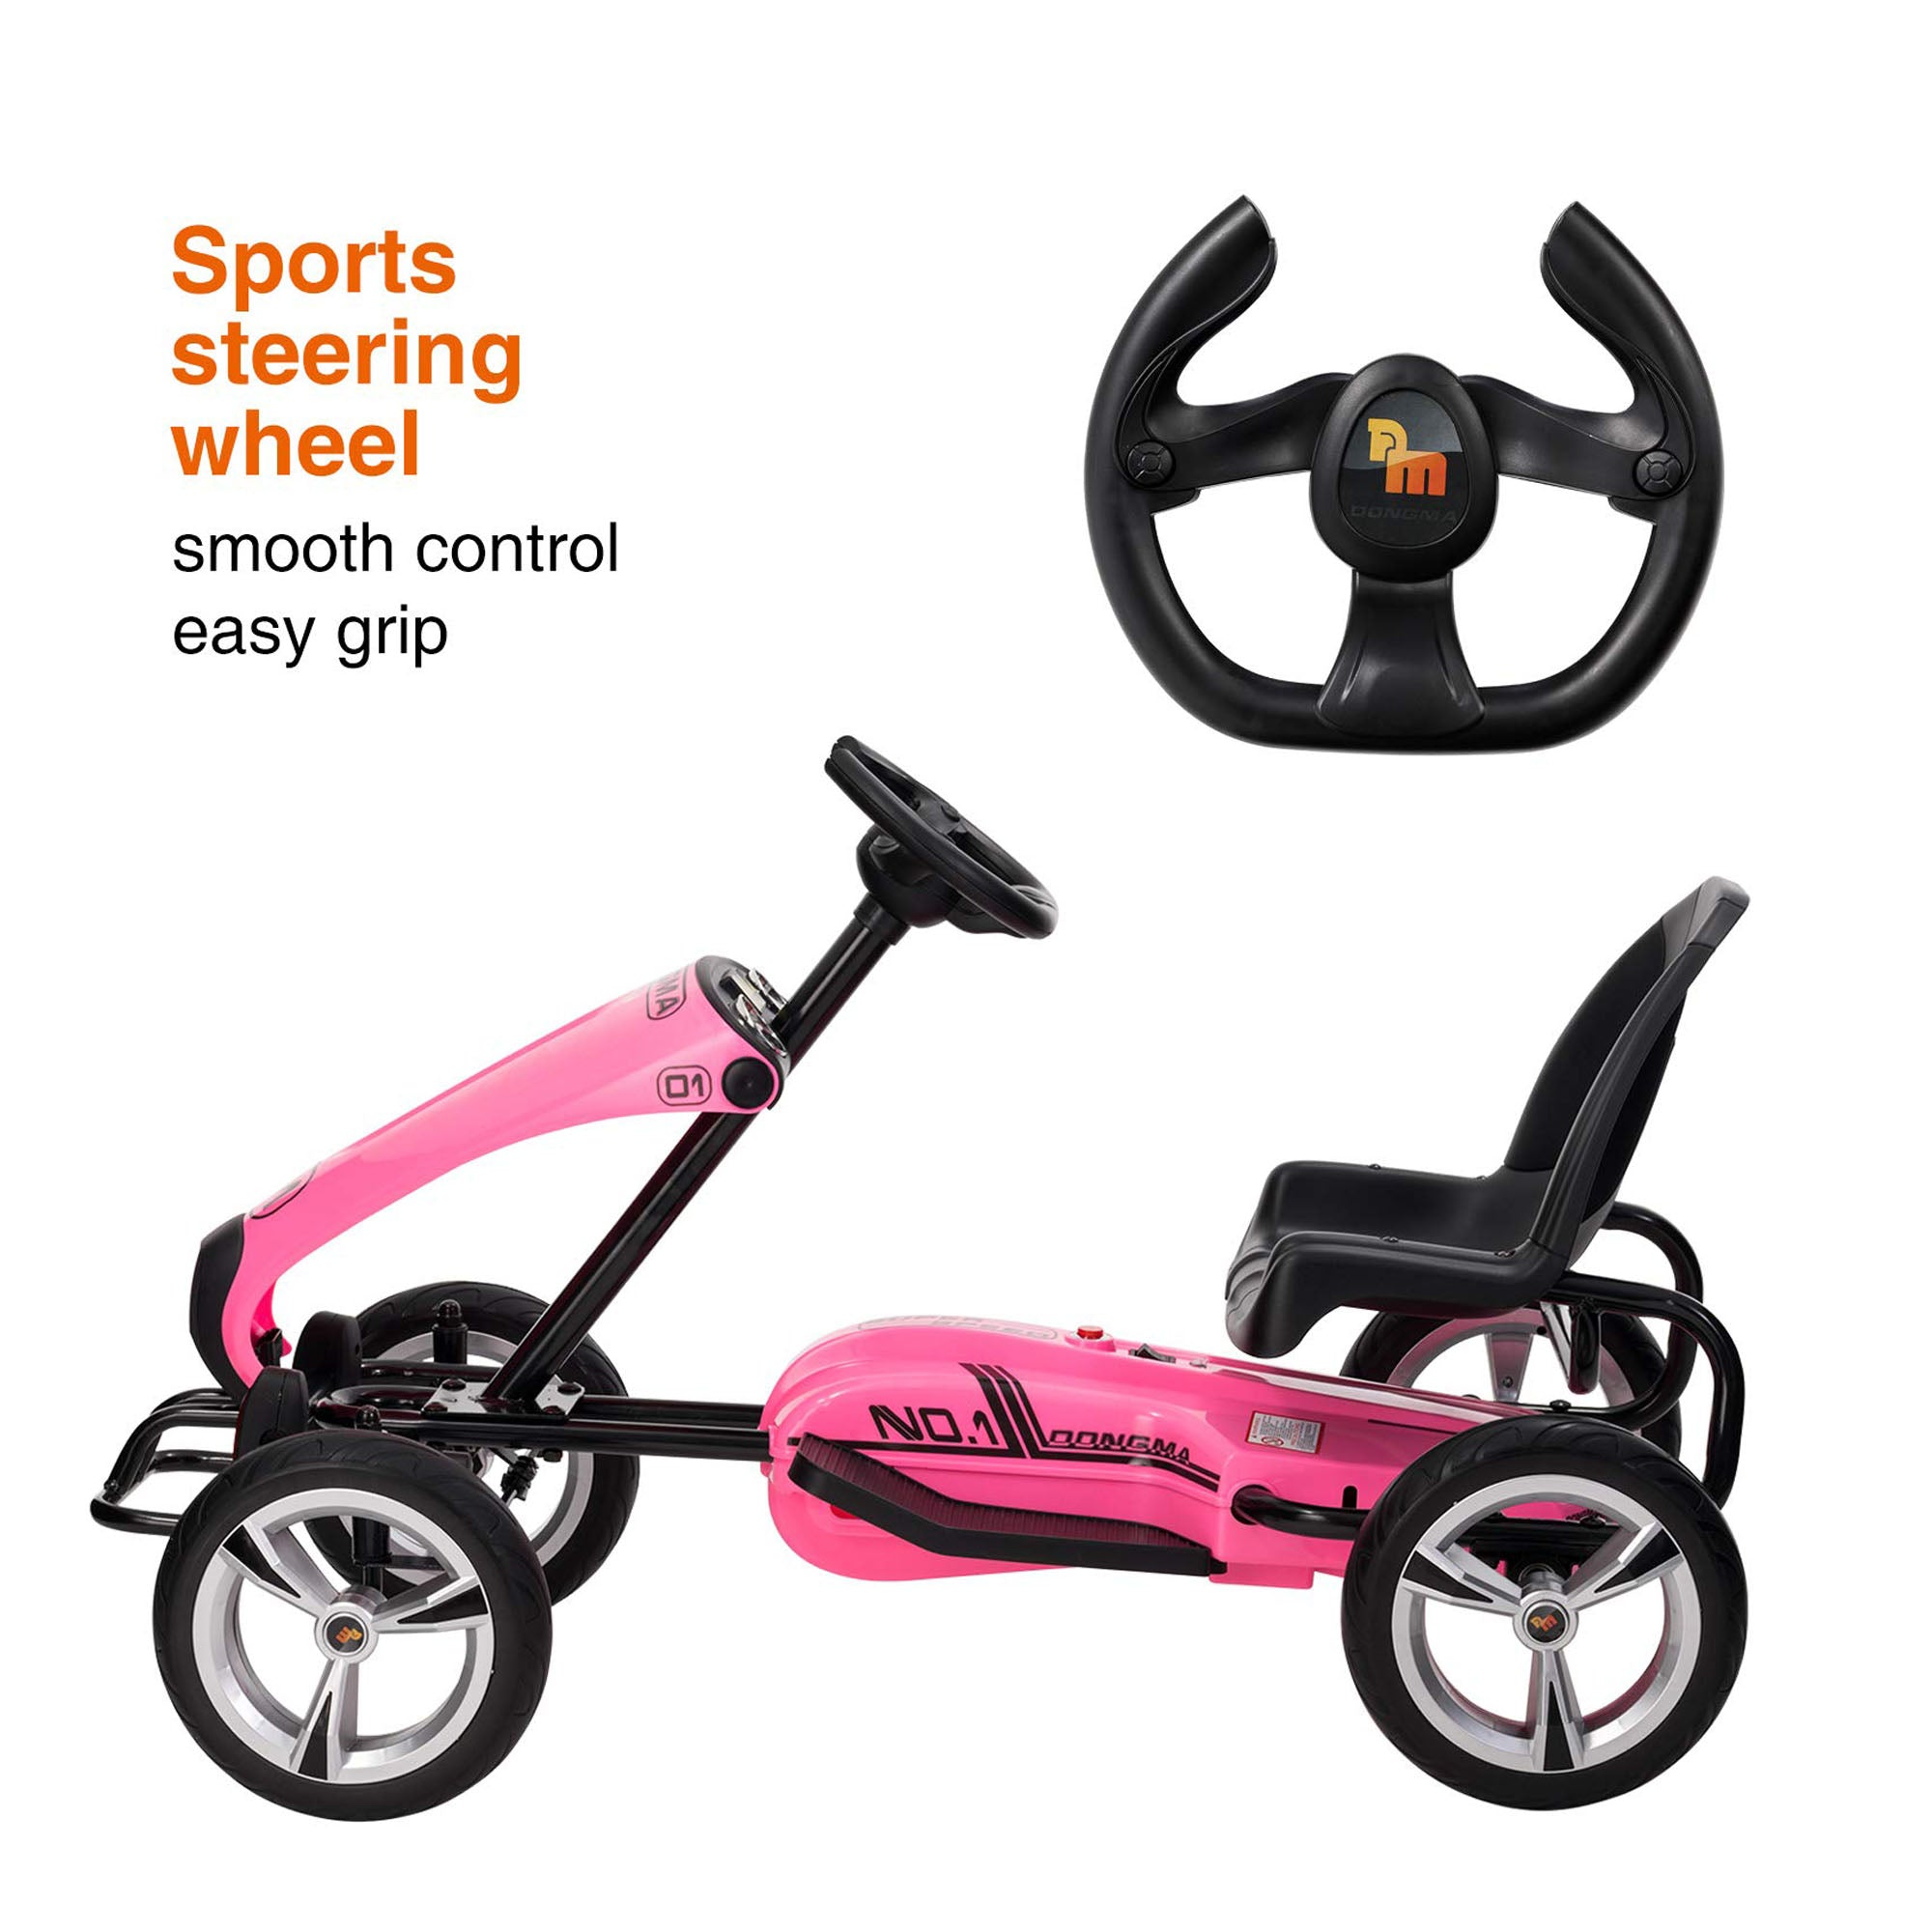 Pedal Go Kart For Kids DMD-308 Pink - Derakbikes